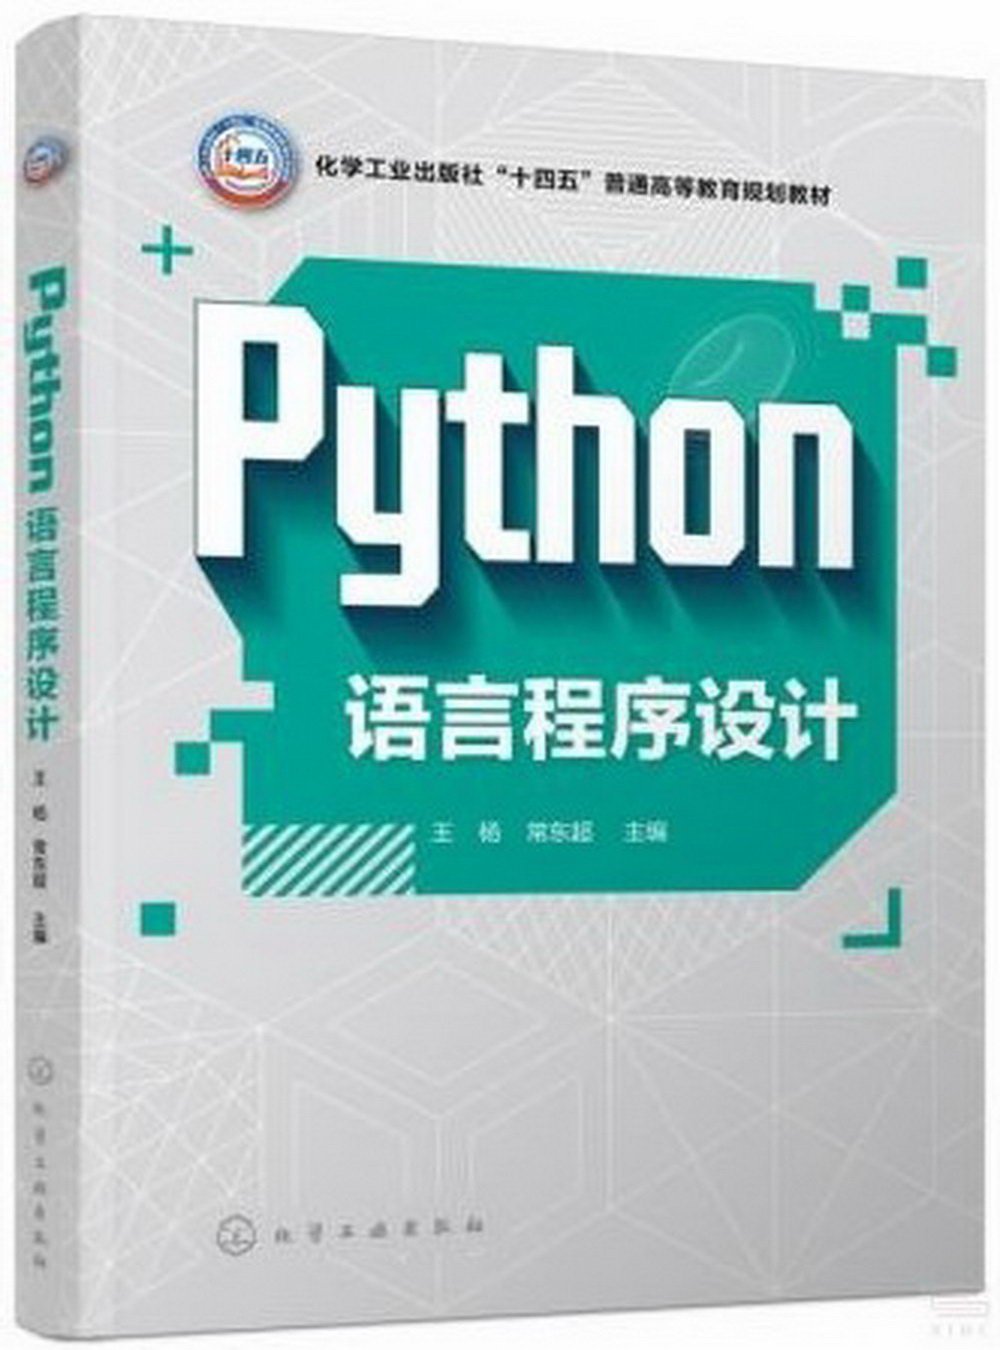 Python語言程序設計